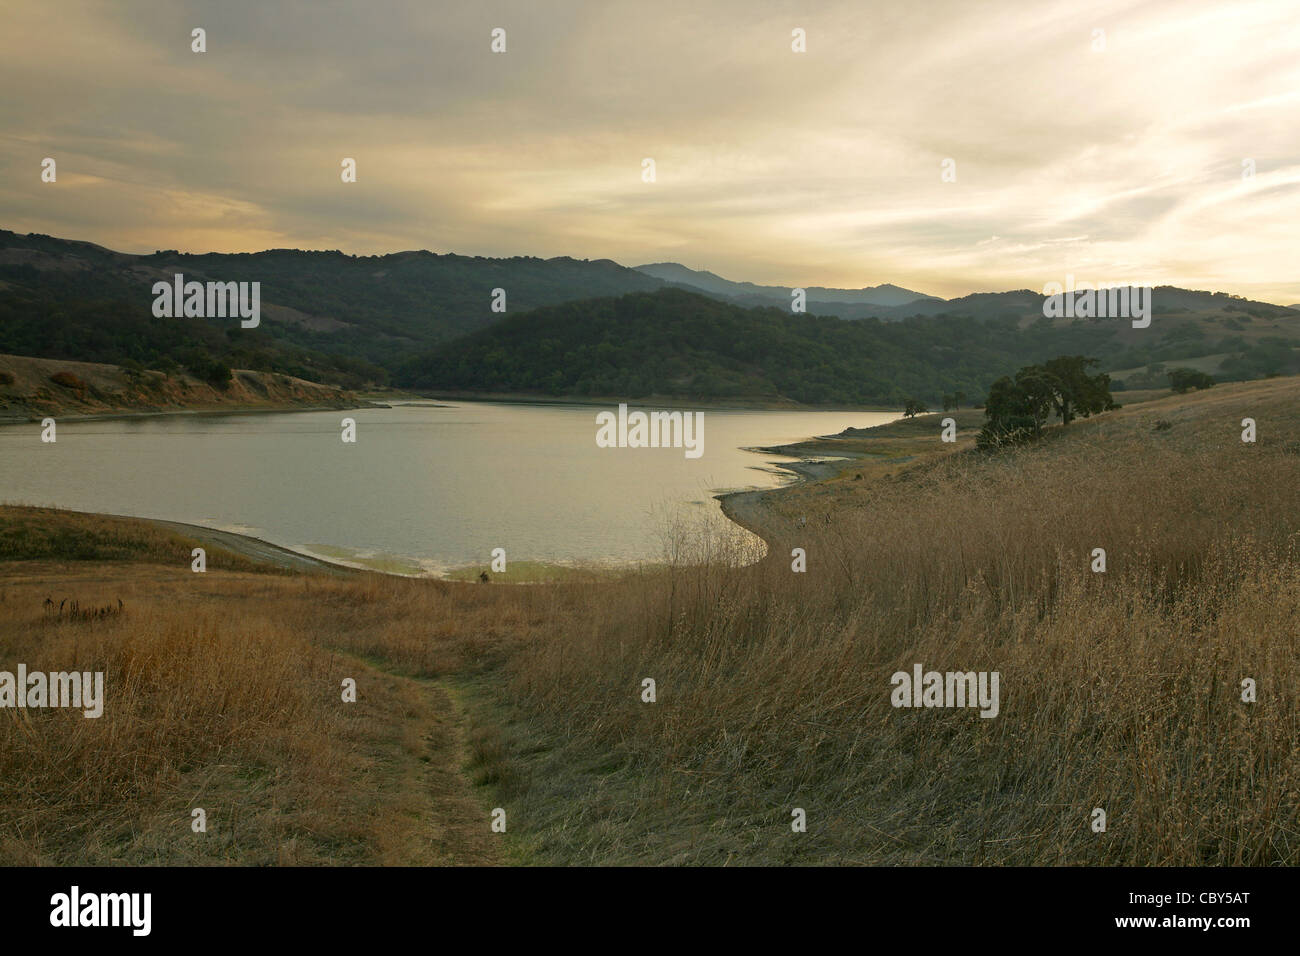 Man-made Calero Lake in the Santa Cruz Mountains of California, at dusk, with hiking path Stock Photo